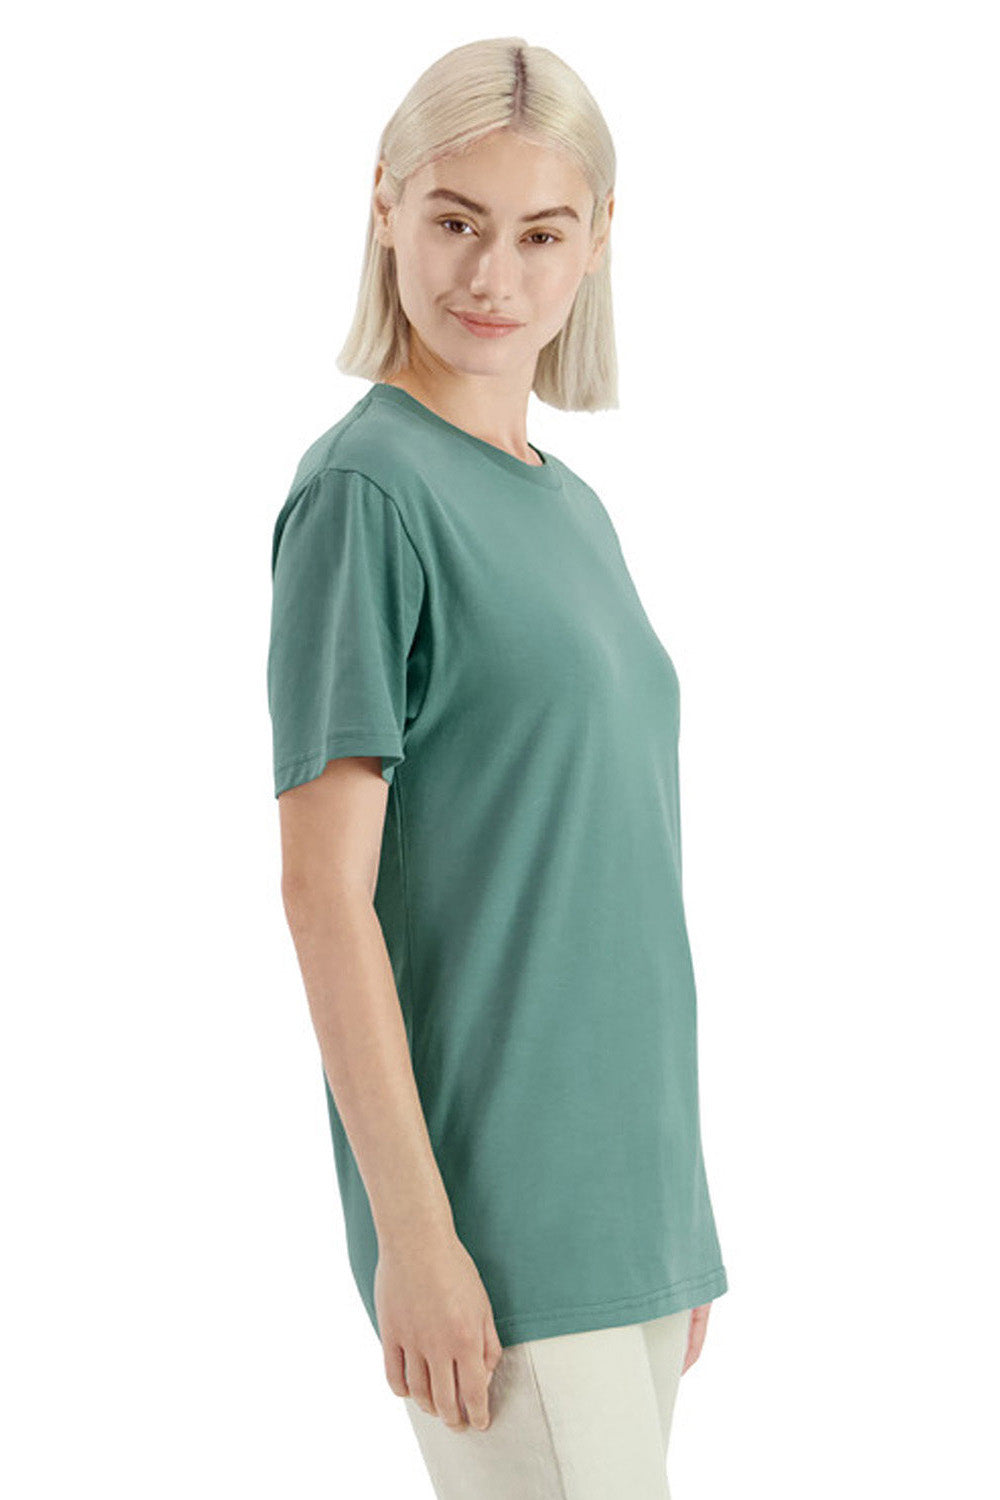 American Apparel 5389 Mens Sueded Cloud Short Sleeve Crewneck T-Shirt Arctic Green Model Side